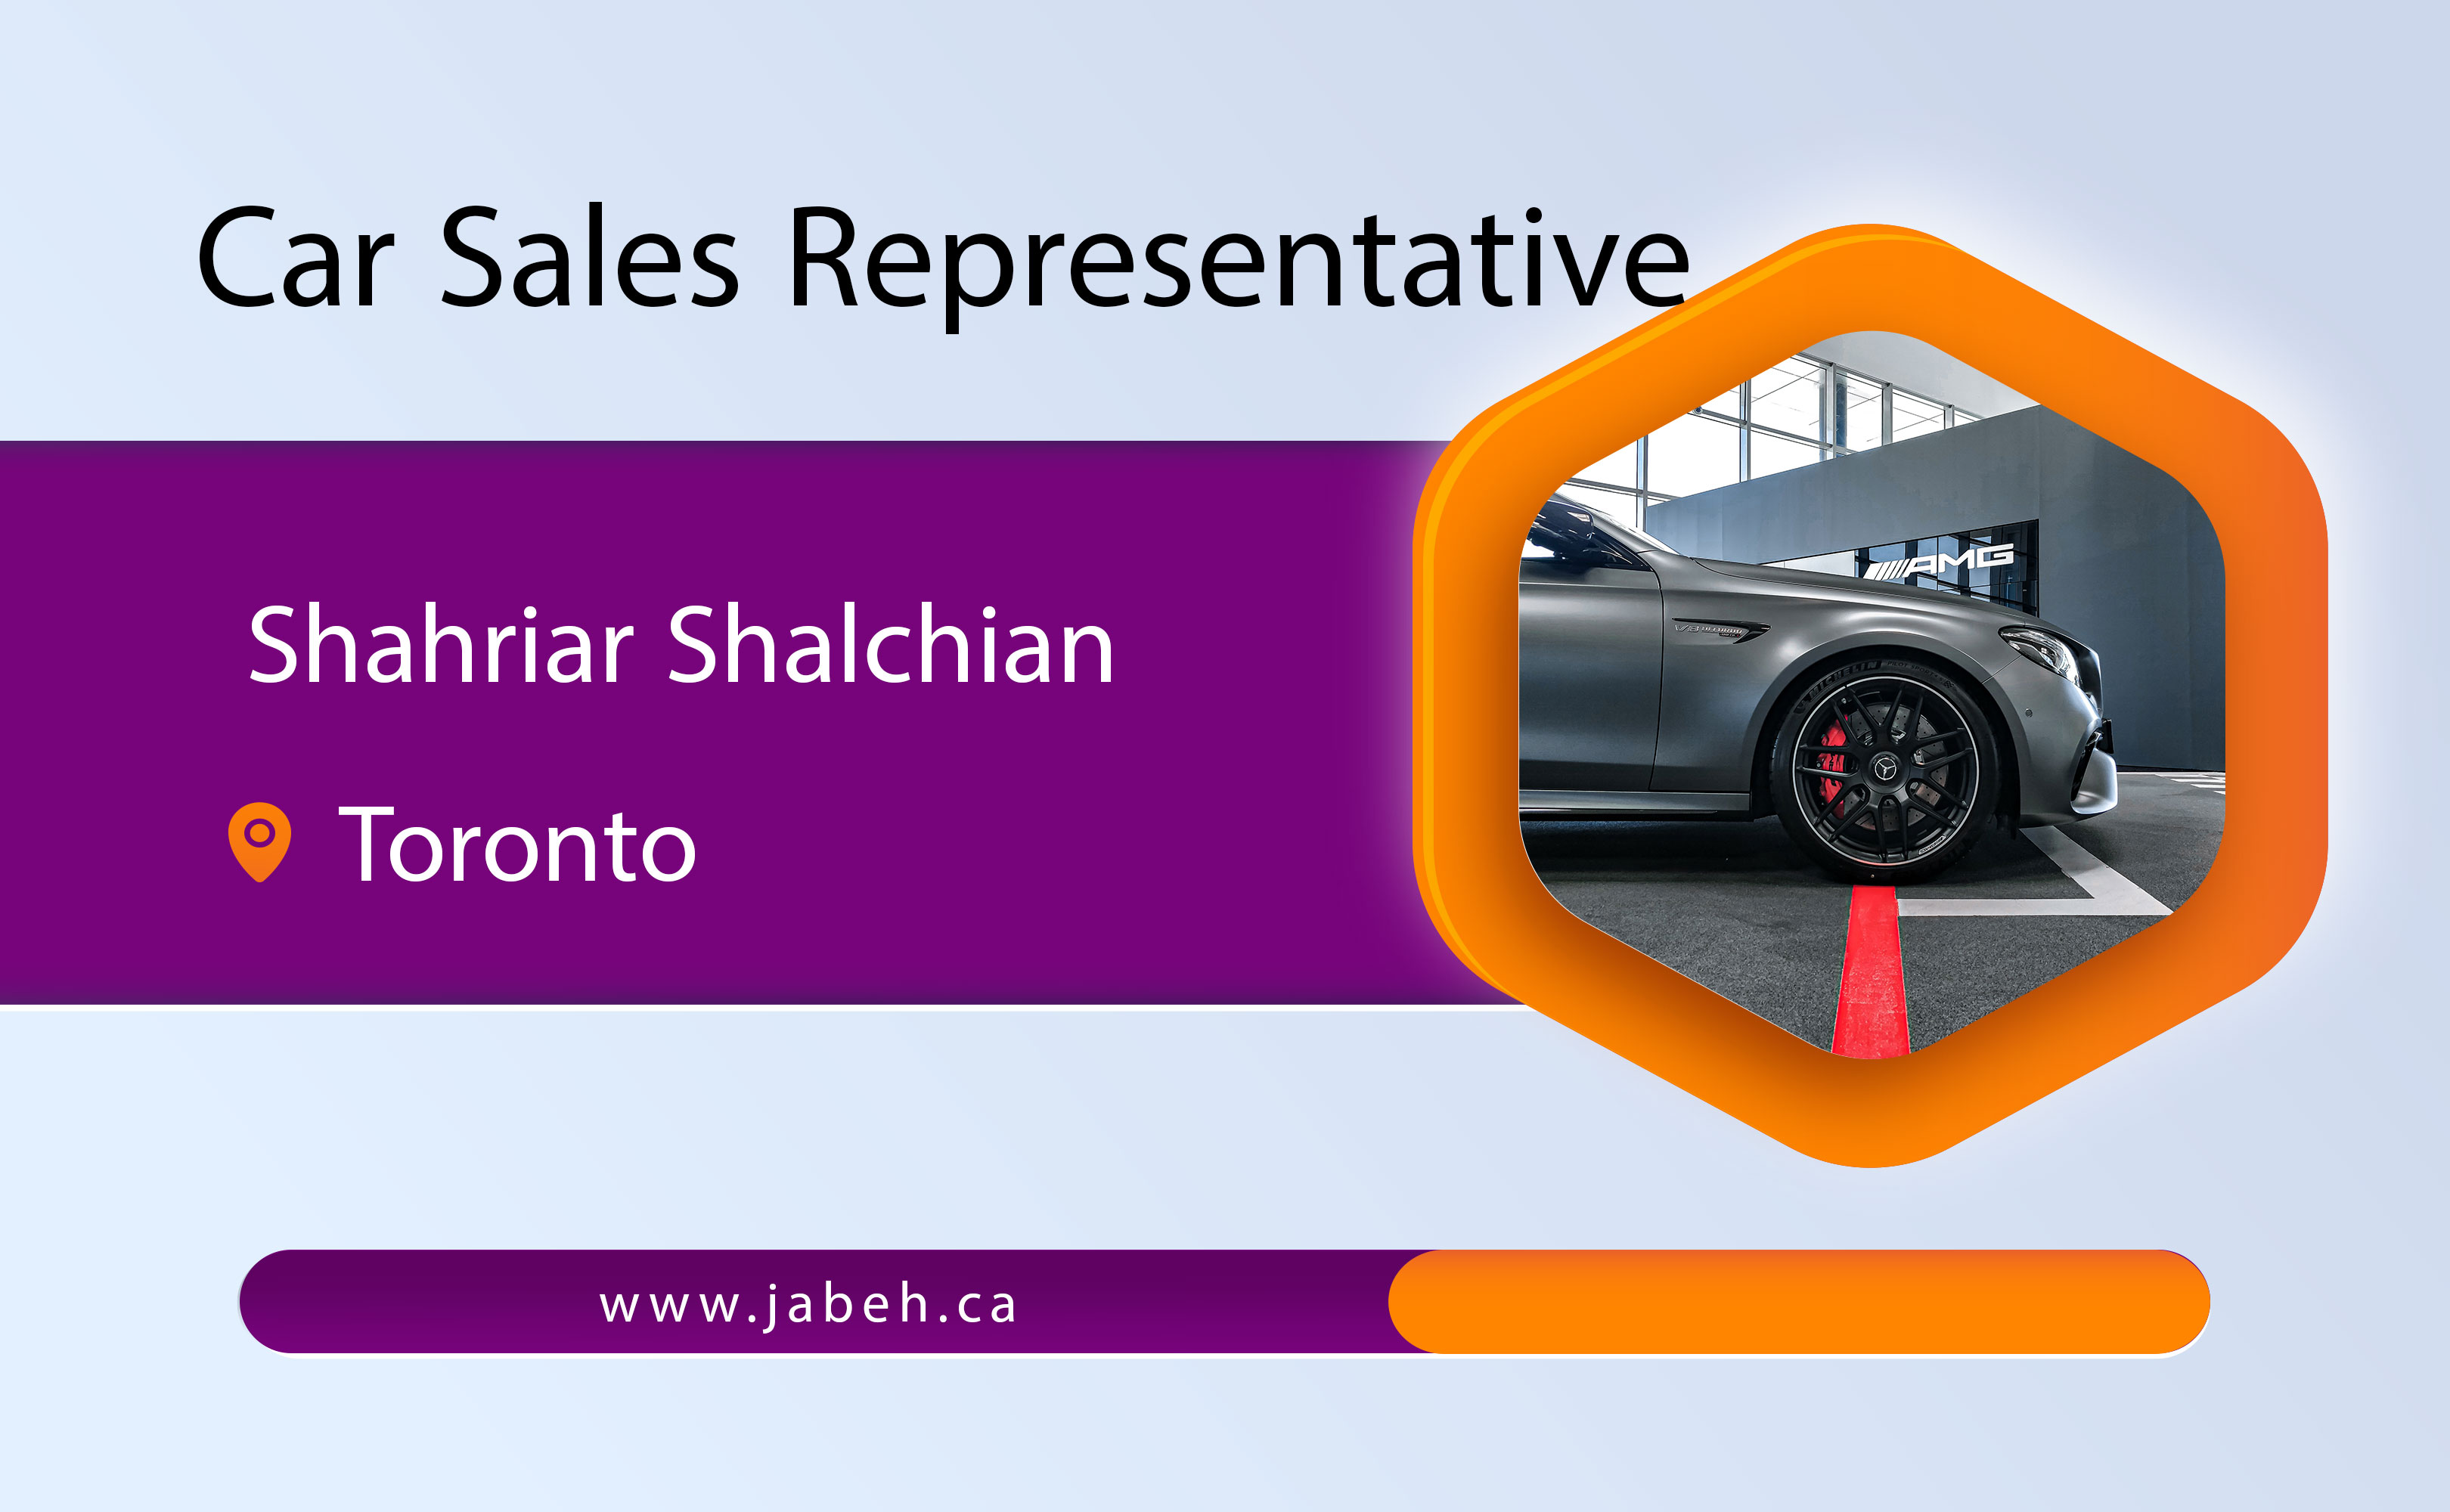 Iranian car sales representative Shahriar Shalchian in Toronto